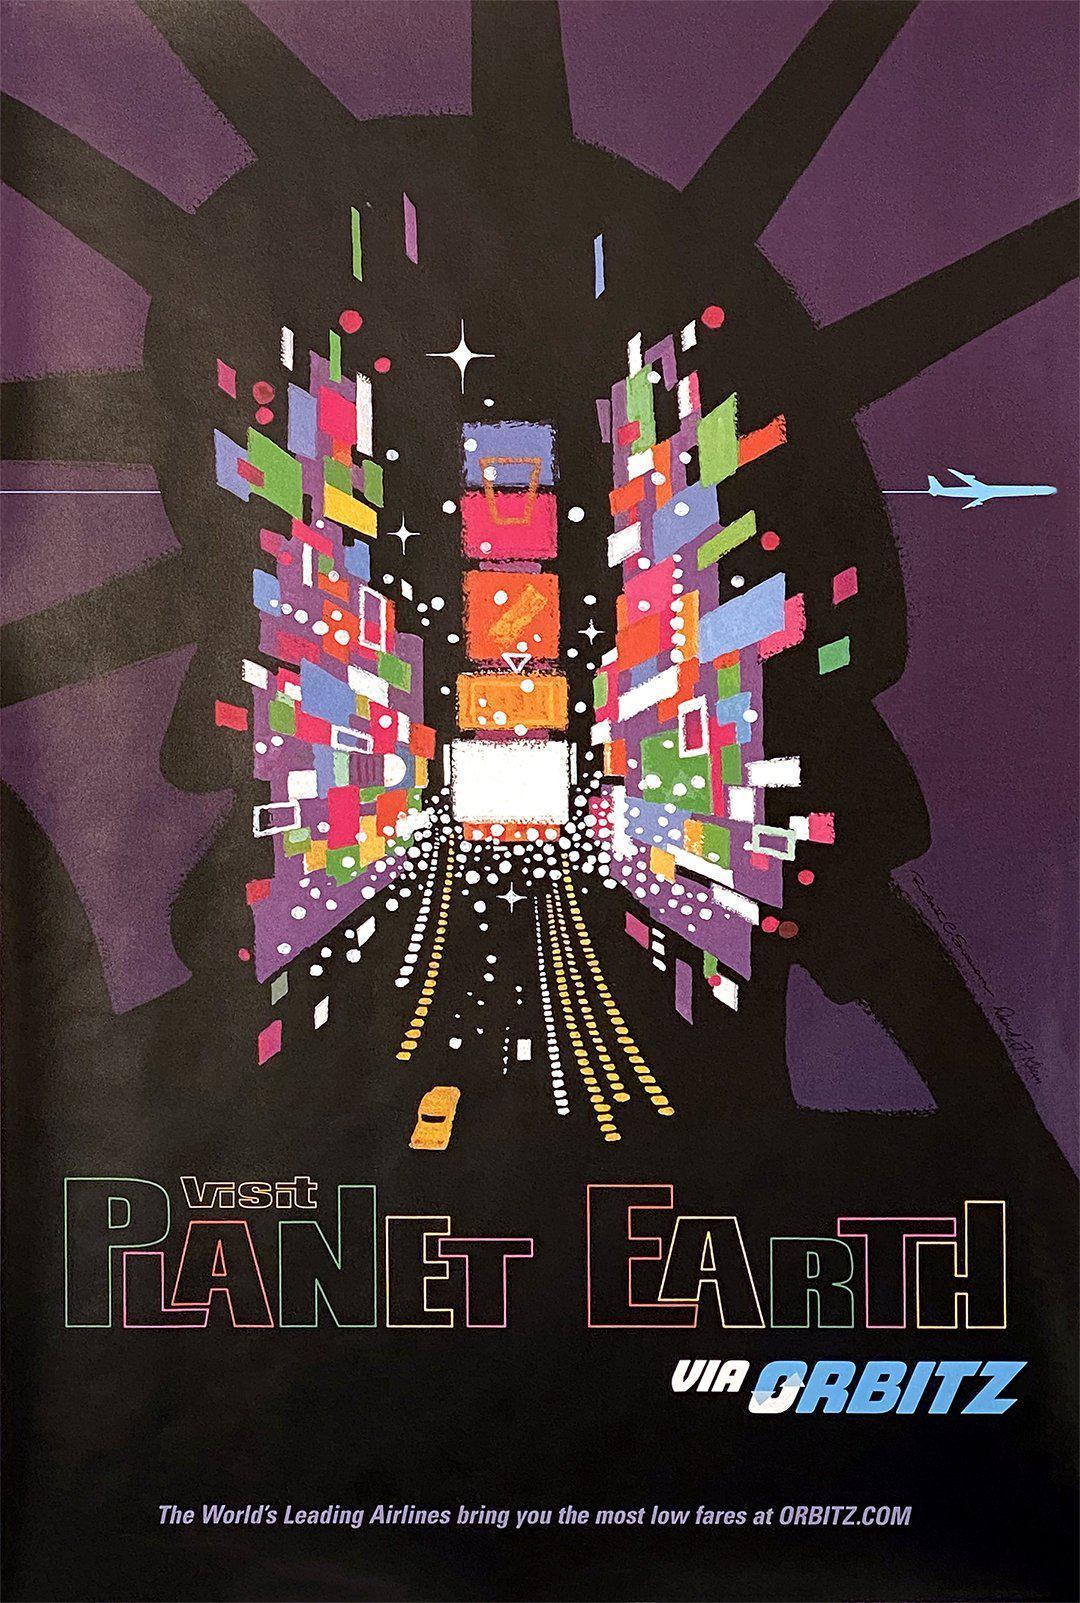 Visit Plant Earth via Orbitz - Times Square New York by David Klein & Robert Swanson Original Poster